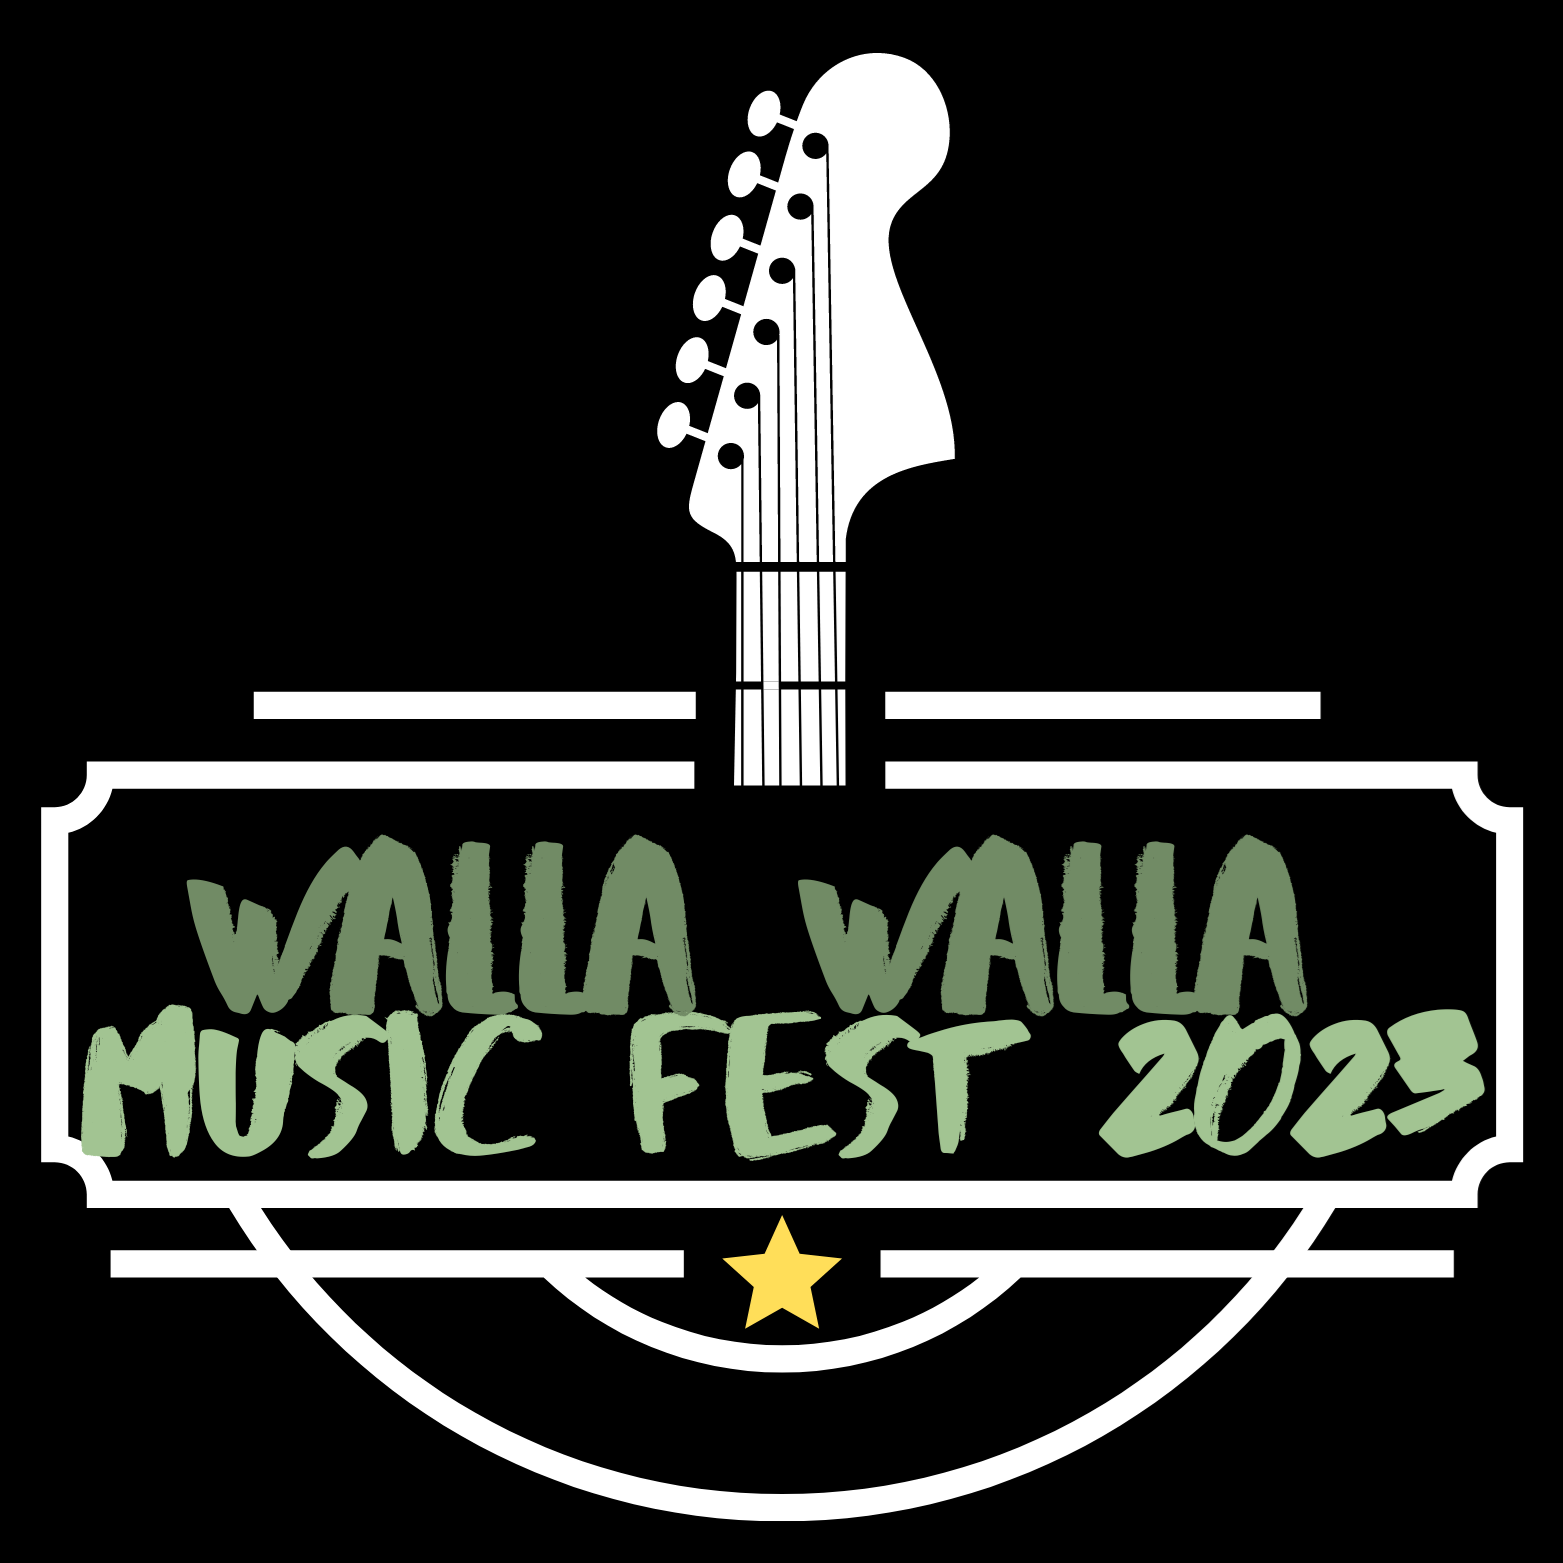 Walla Walla Music Fest